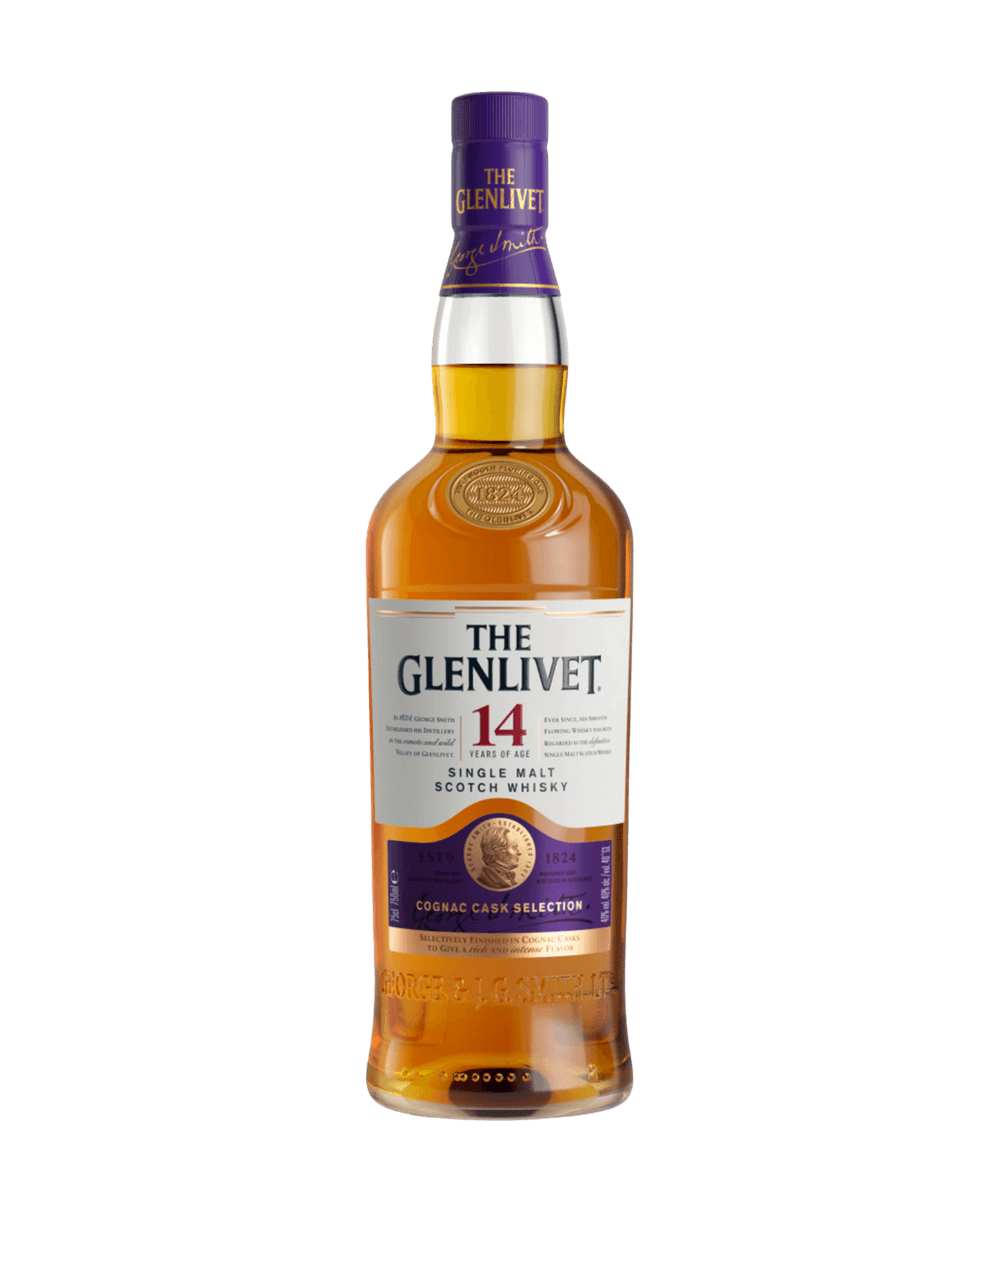 The Glenlivet Single Malt Scotch Whisky 14 Year Old